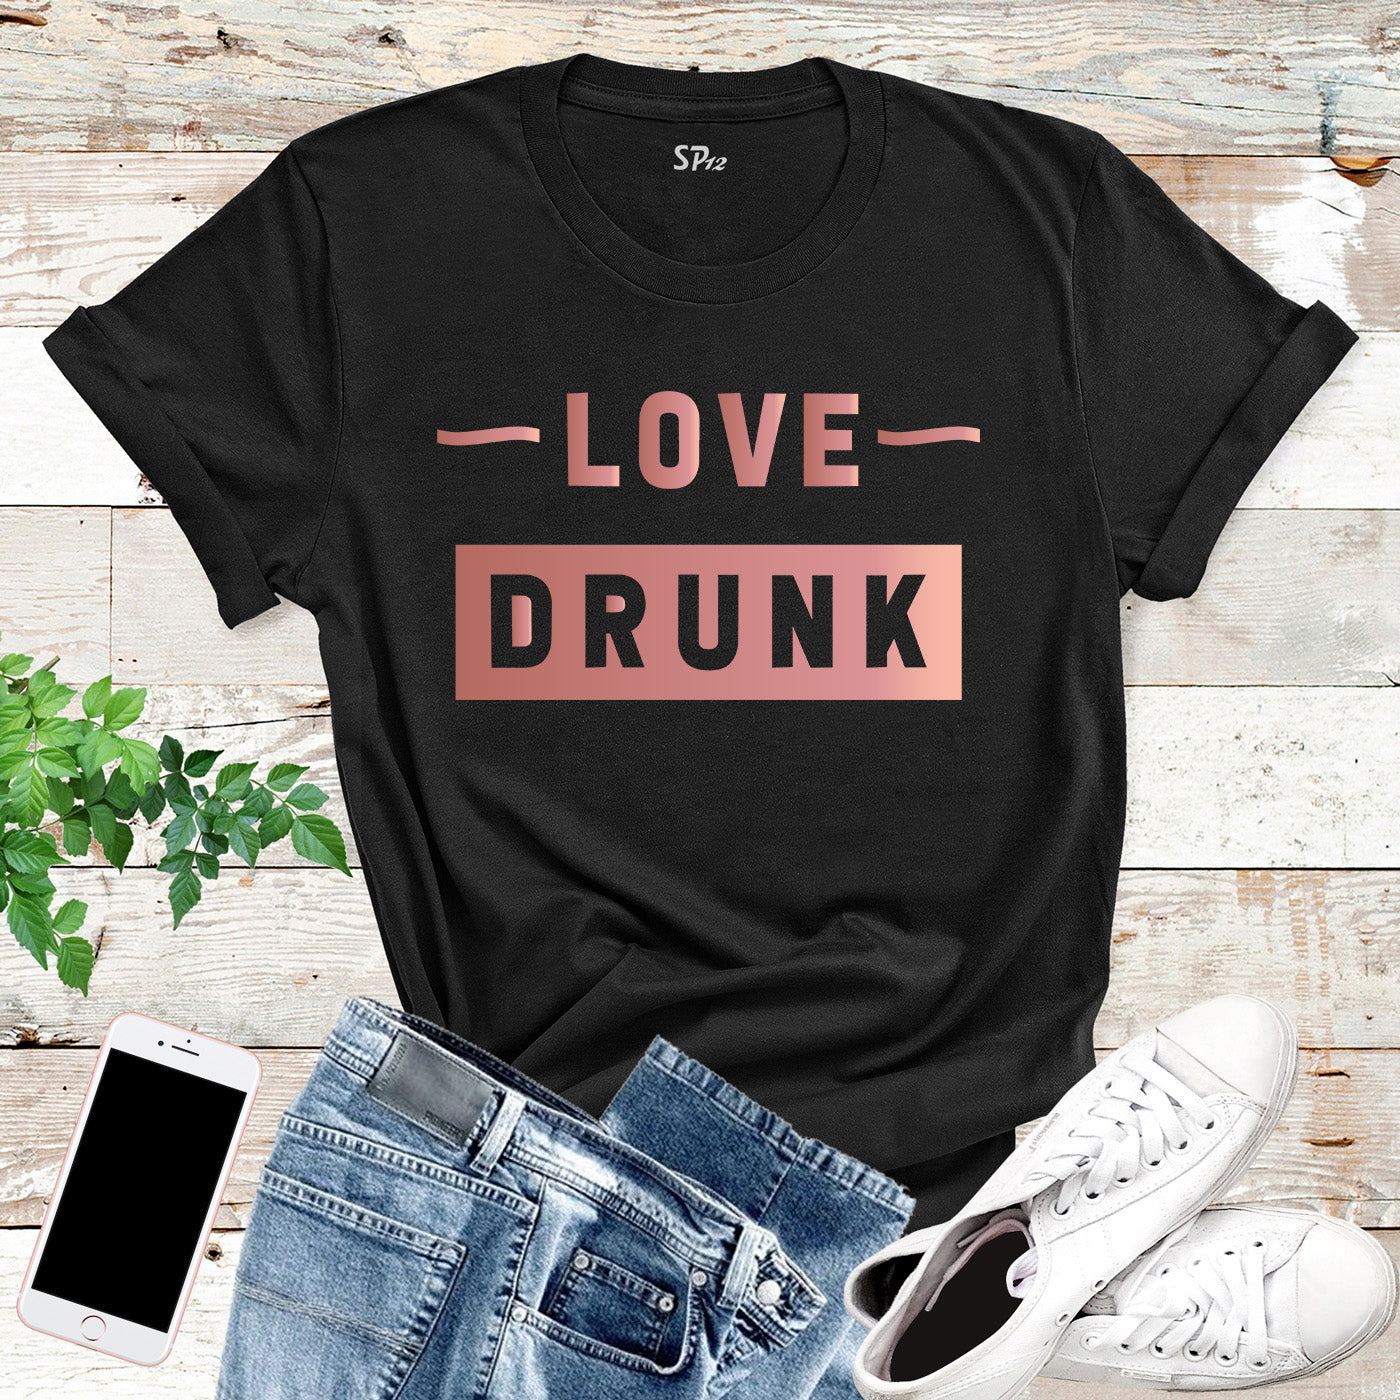 Love Drunk Wedding Party T Shirts Bride Groom Bachelorette Party Hen Party Bridesmaid Tshirt